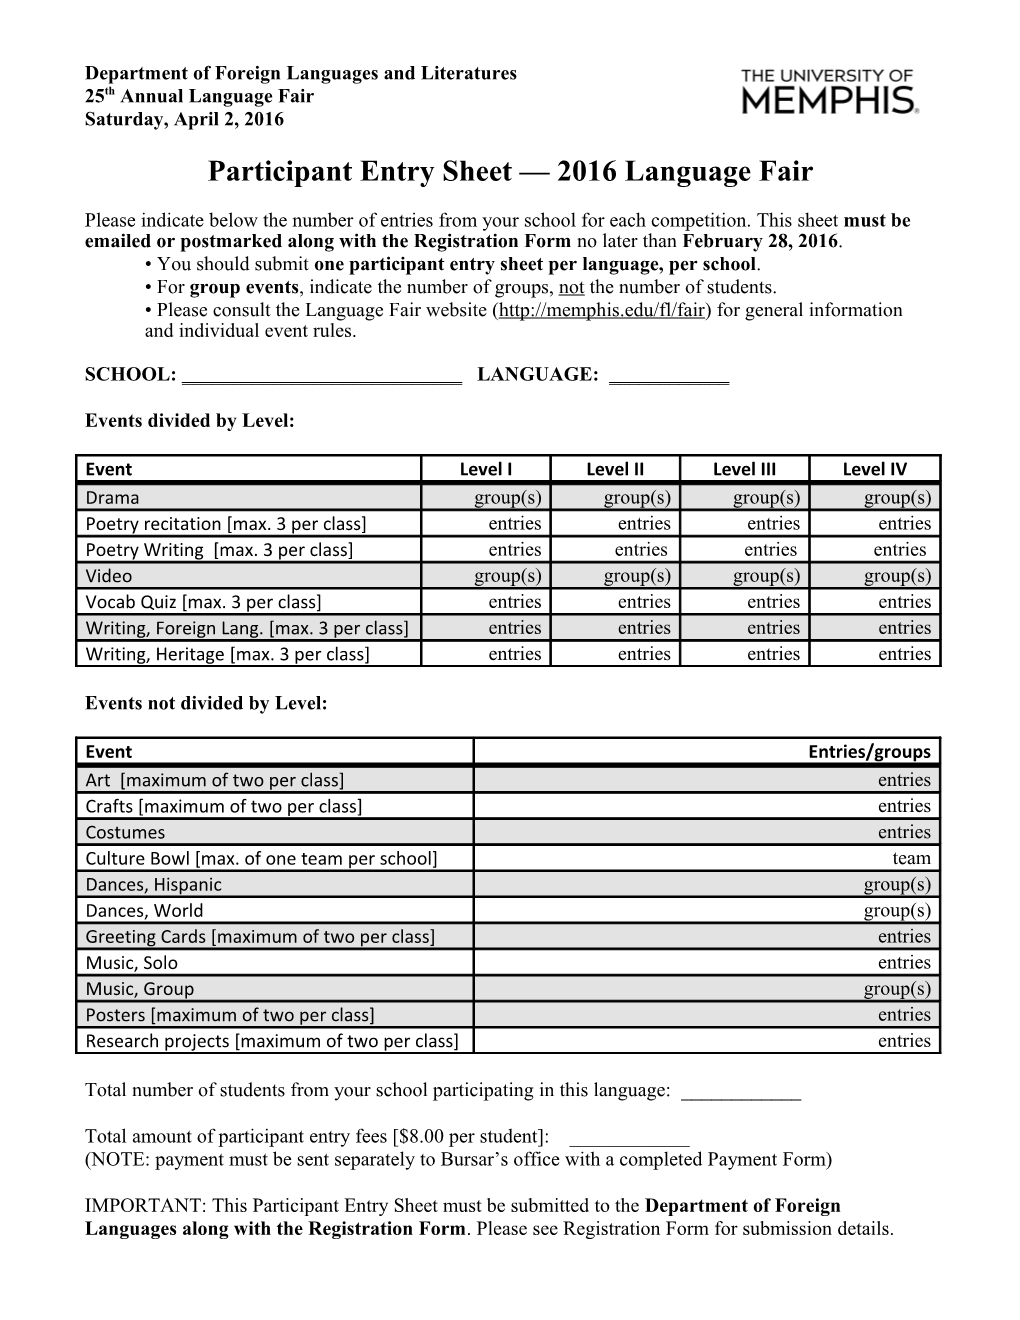 Participant Entry Sheet